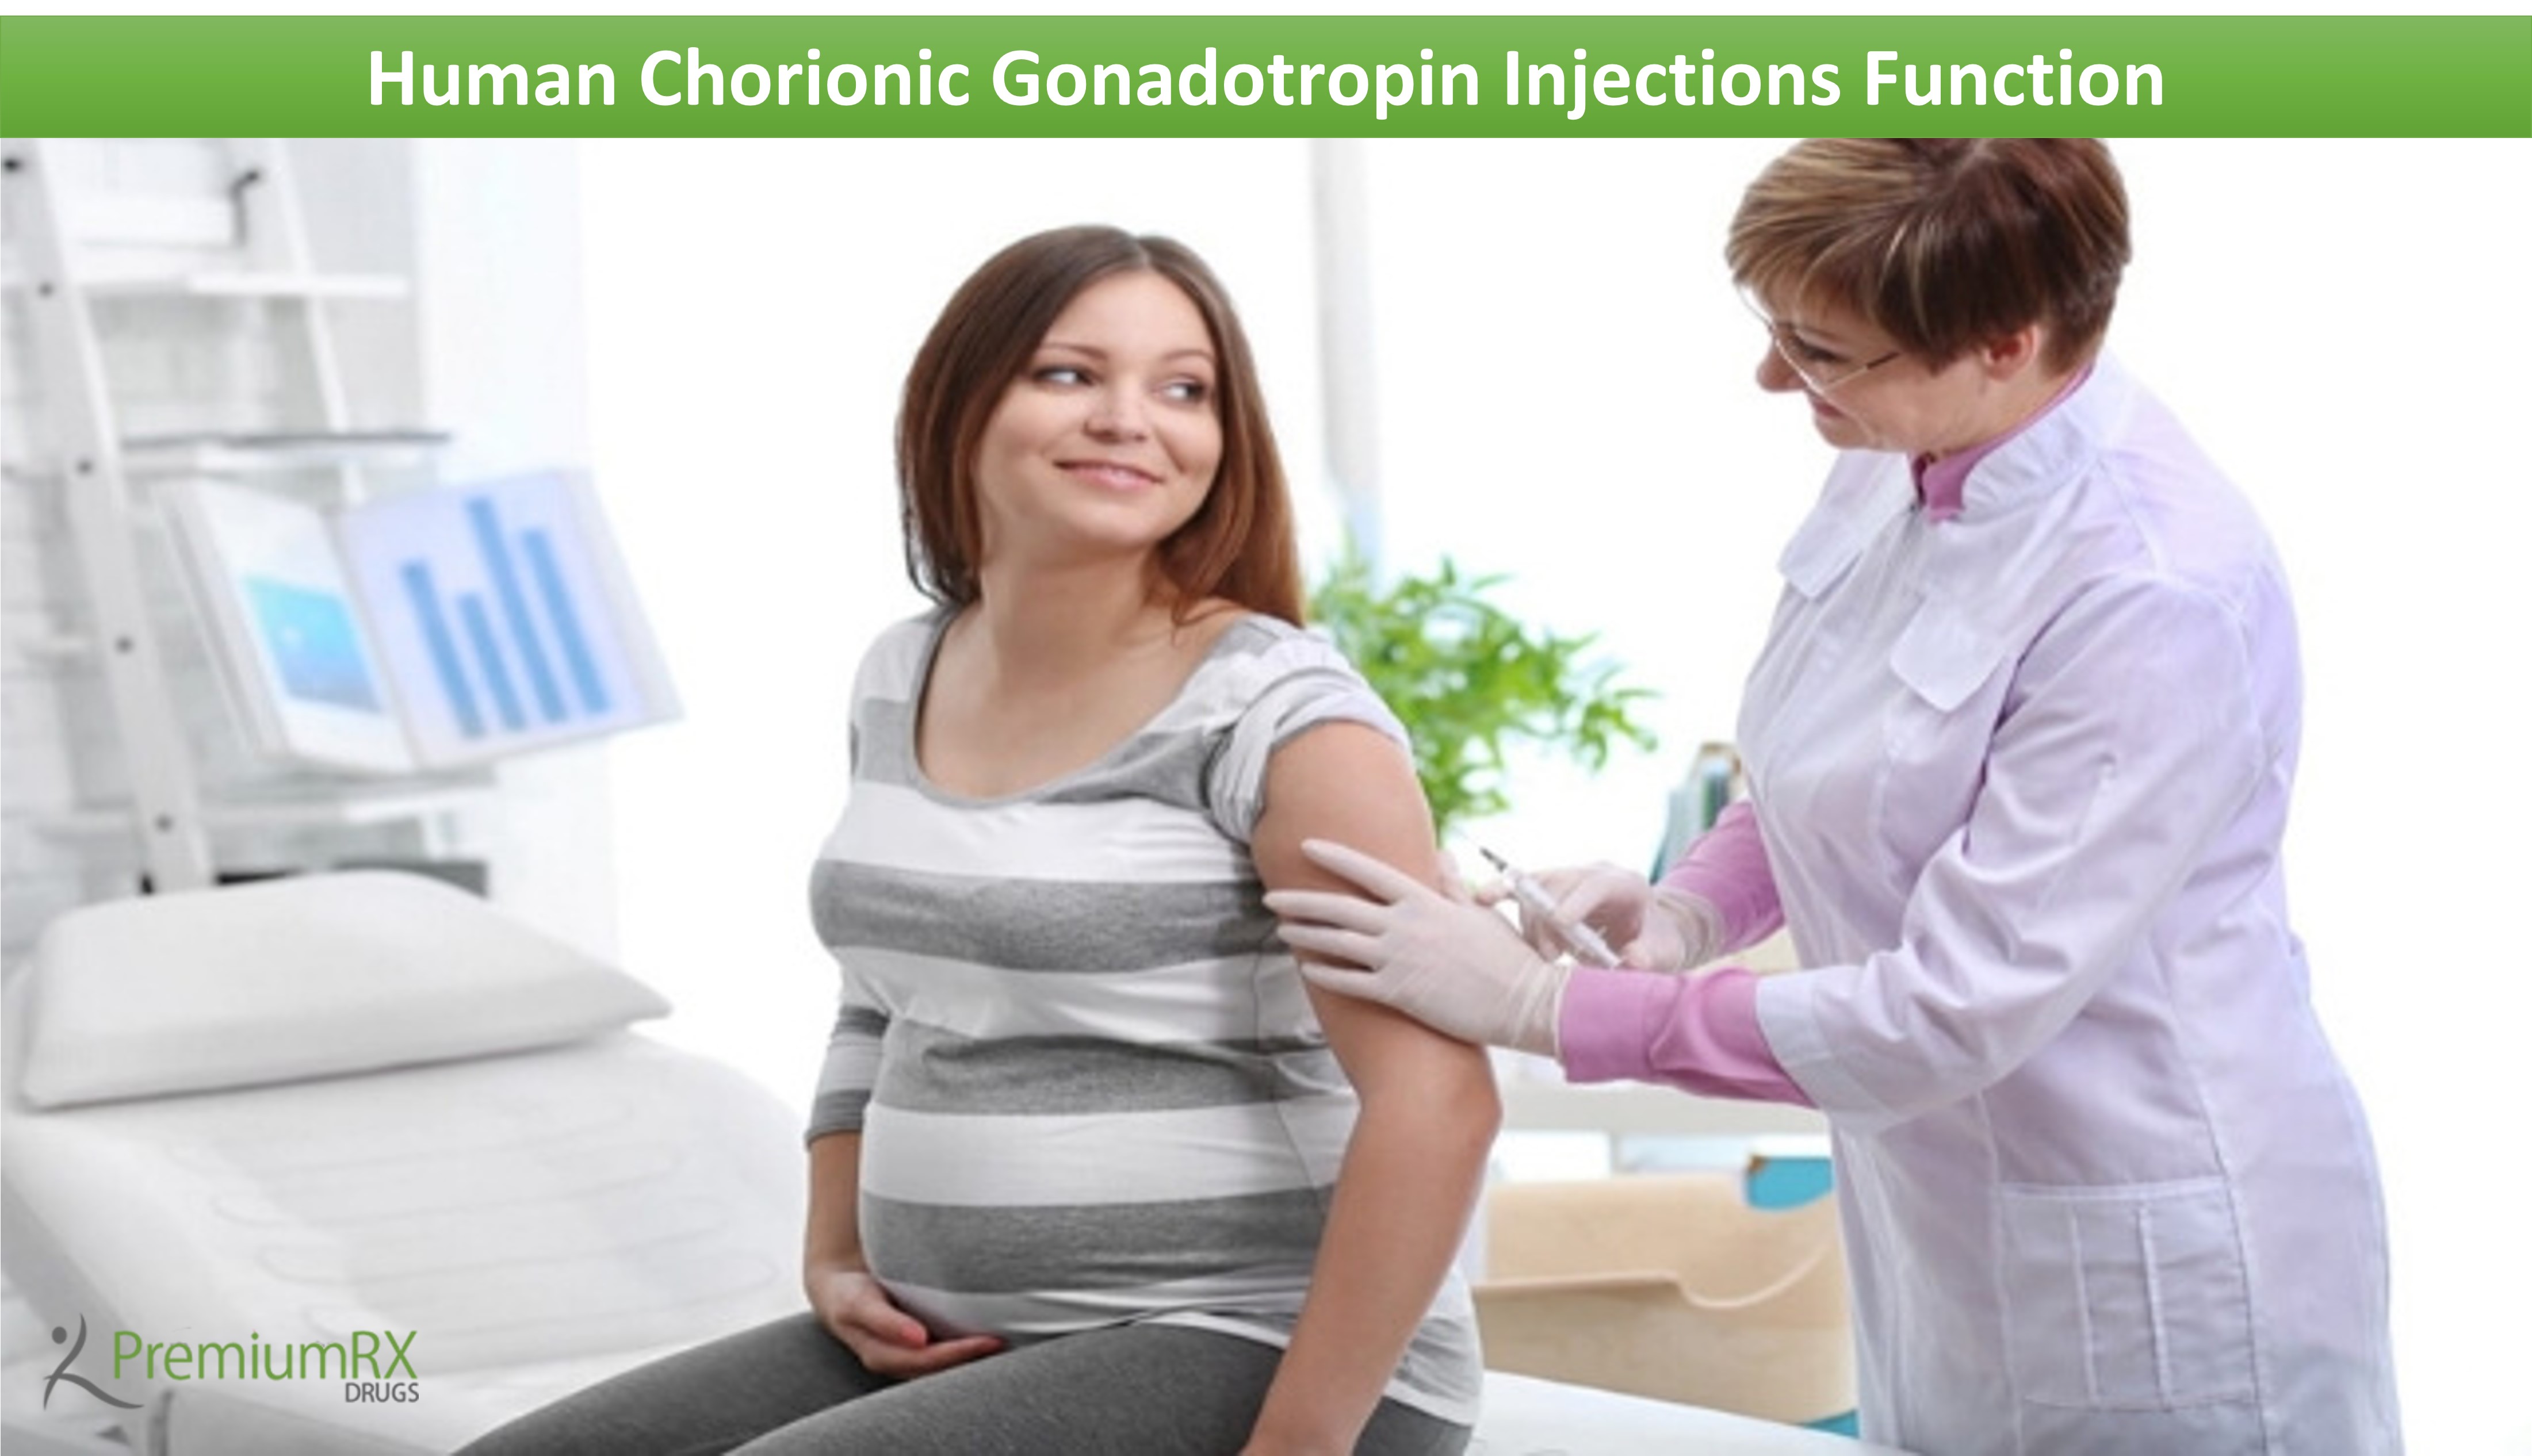 Human Chorionic Gonadotropin Injections Function